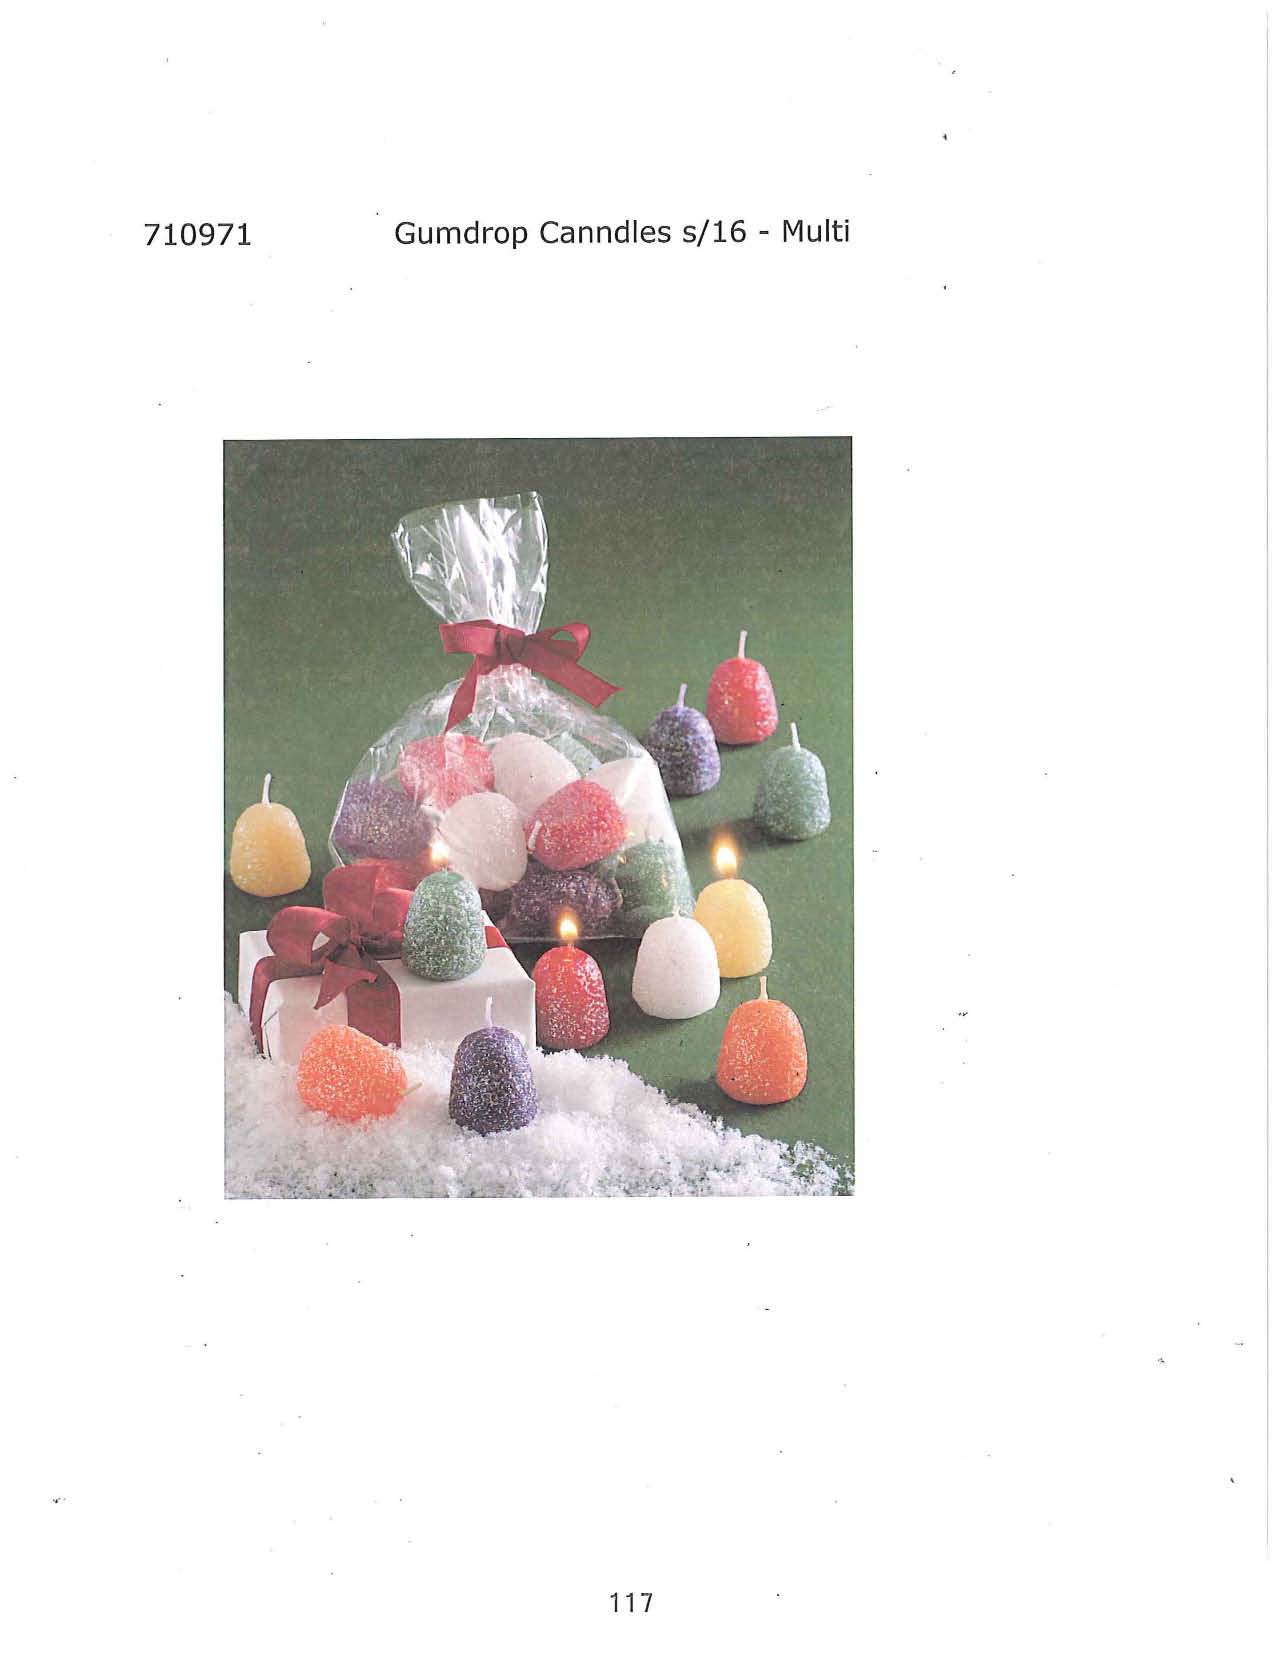 Gumdrop Candle s/16 - Multi